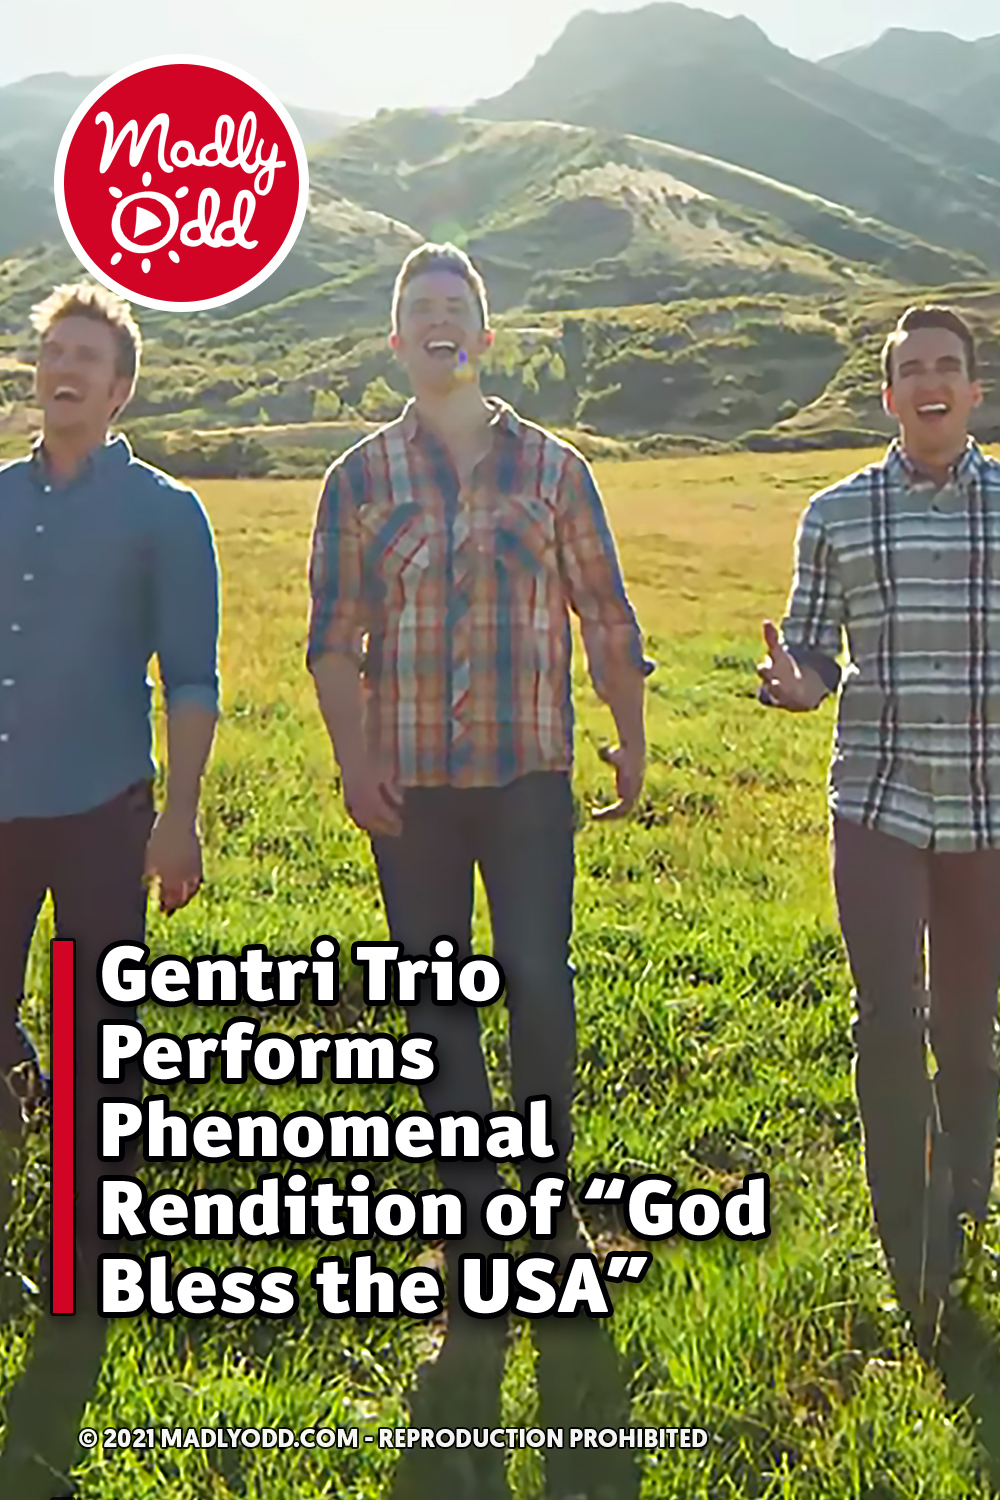 Gentri Trio Performs Phenomenal Rendition of “God Bless the USA”